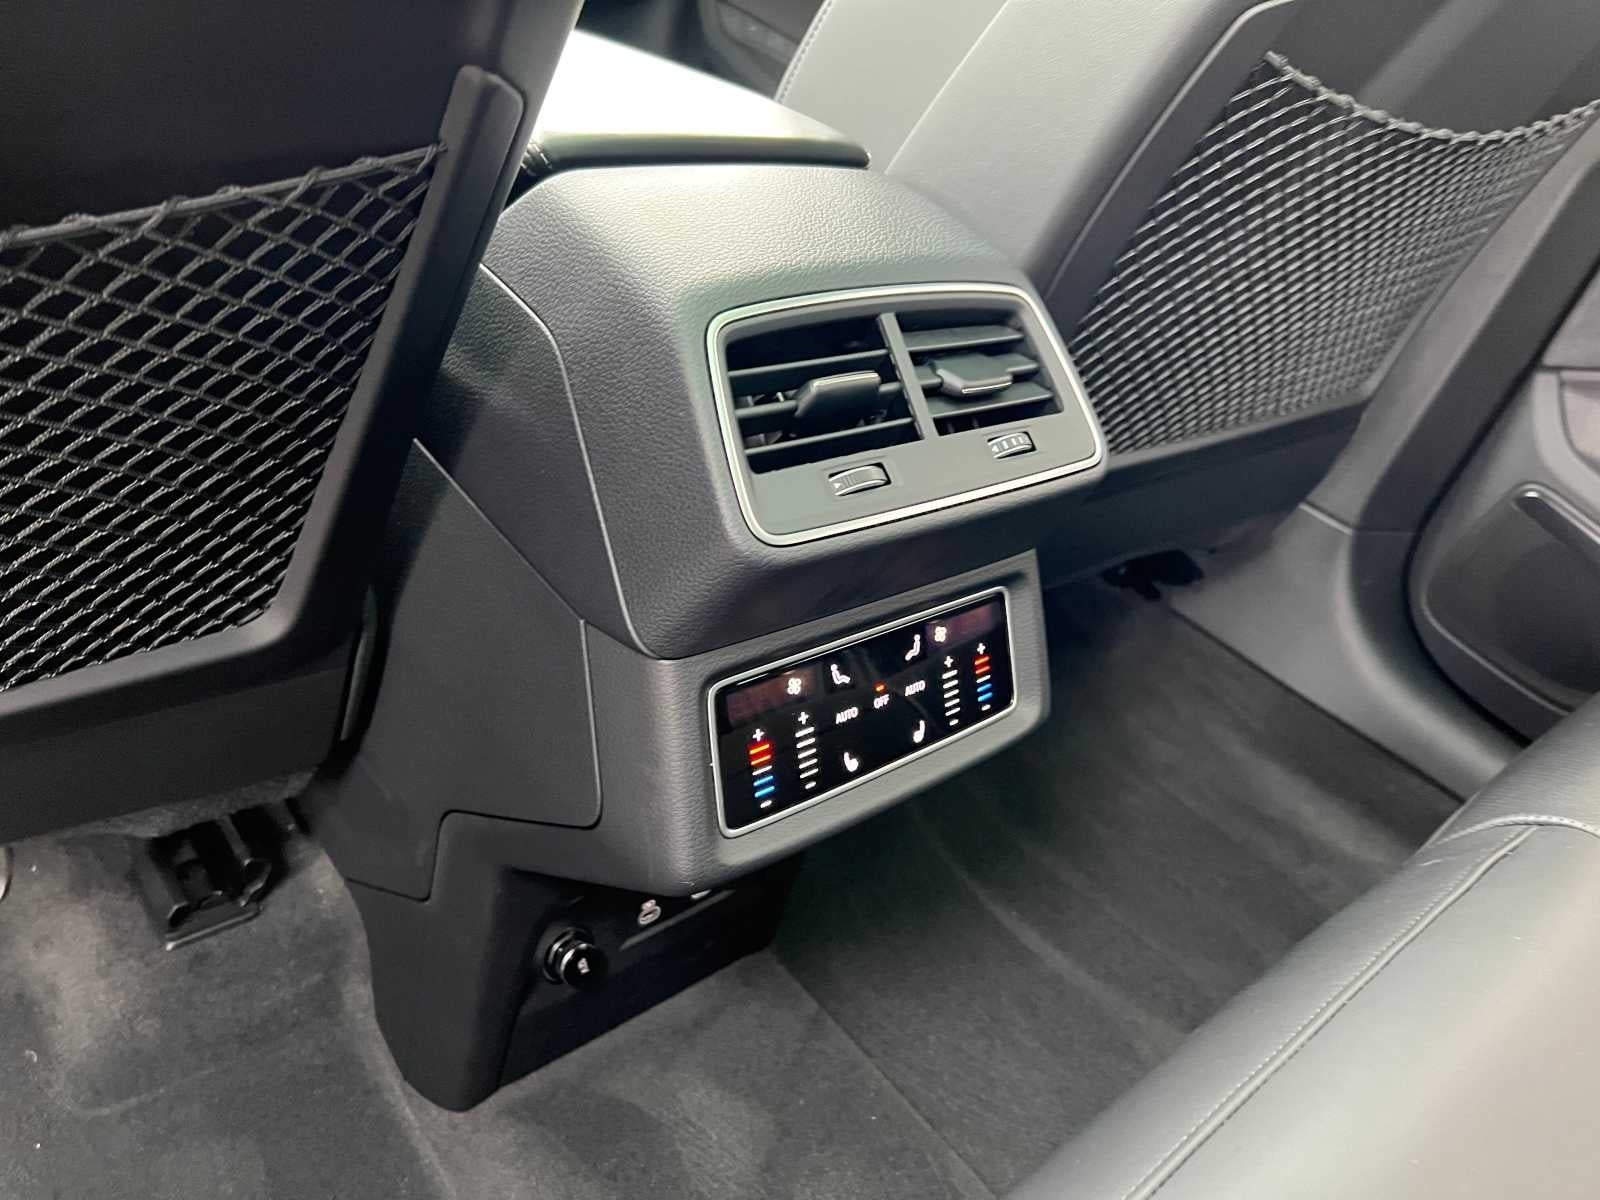 2023 Audi e-tron Chronos